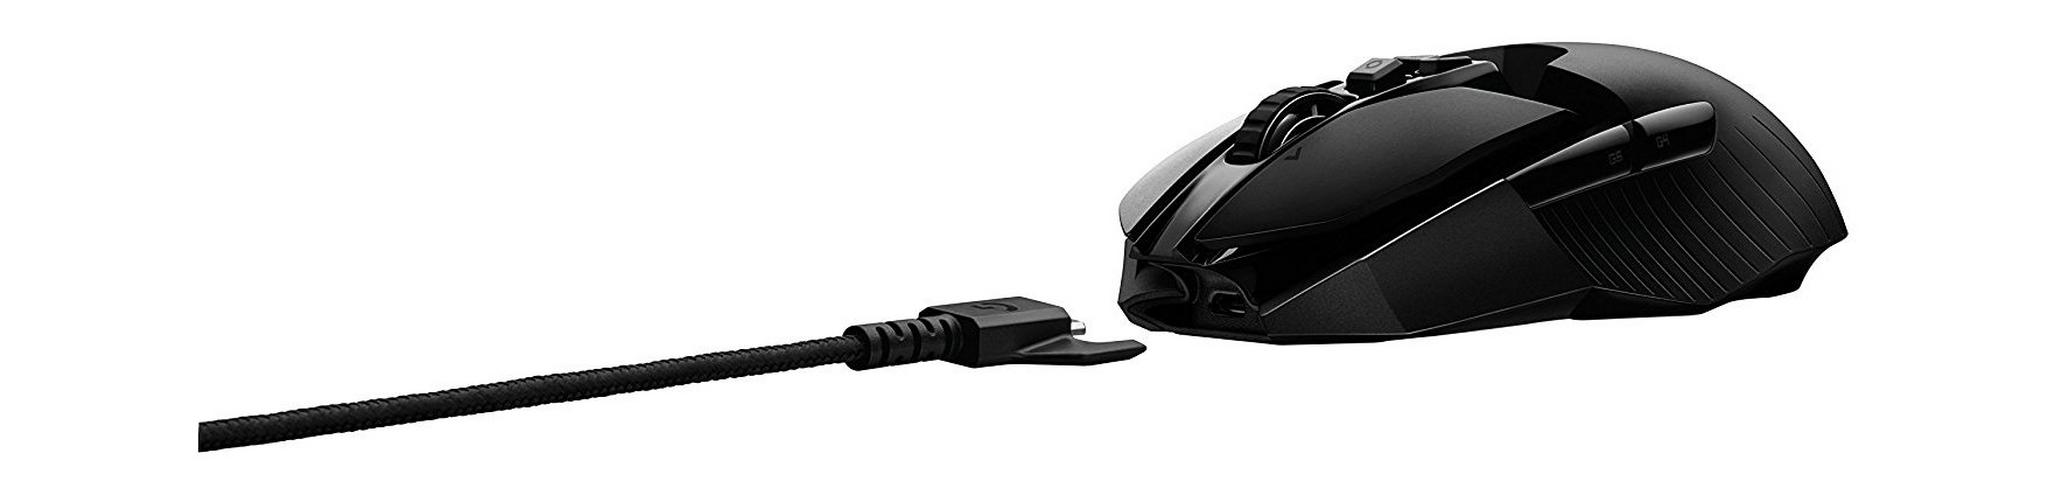 Logitech Lightspeed Wireless Gaming Mouse (G903) - Black